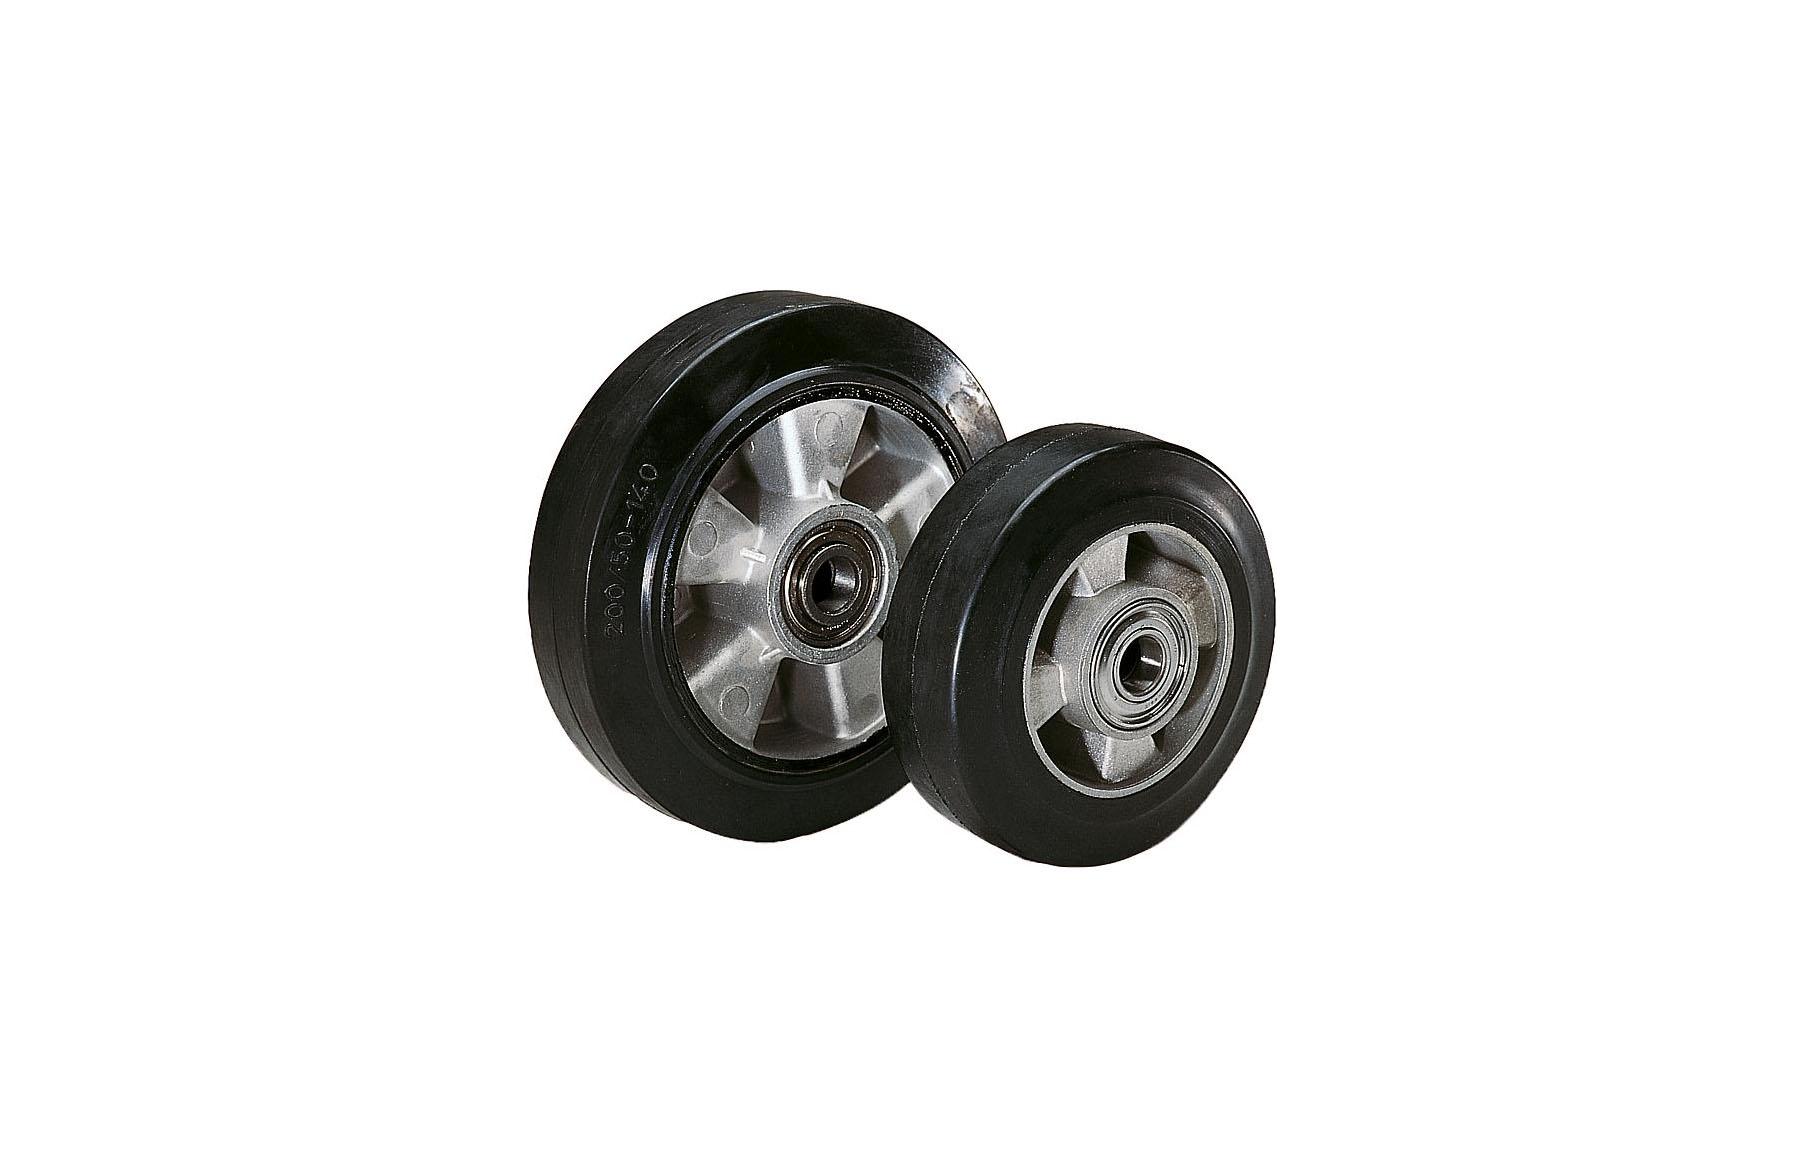 K1777_Wheels rubber tyres on die-cast aluminium rims